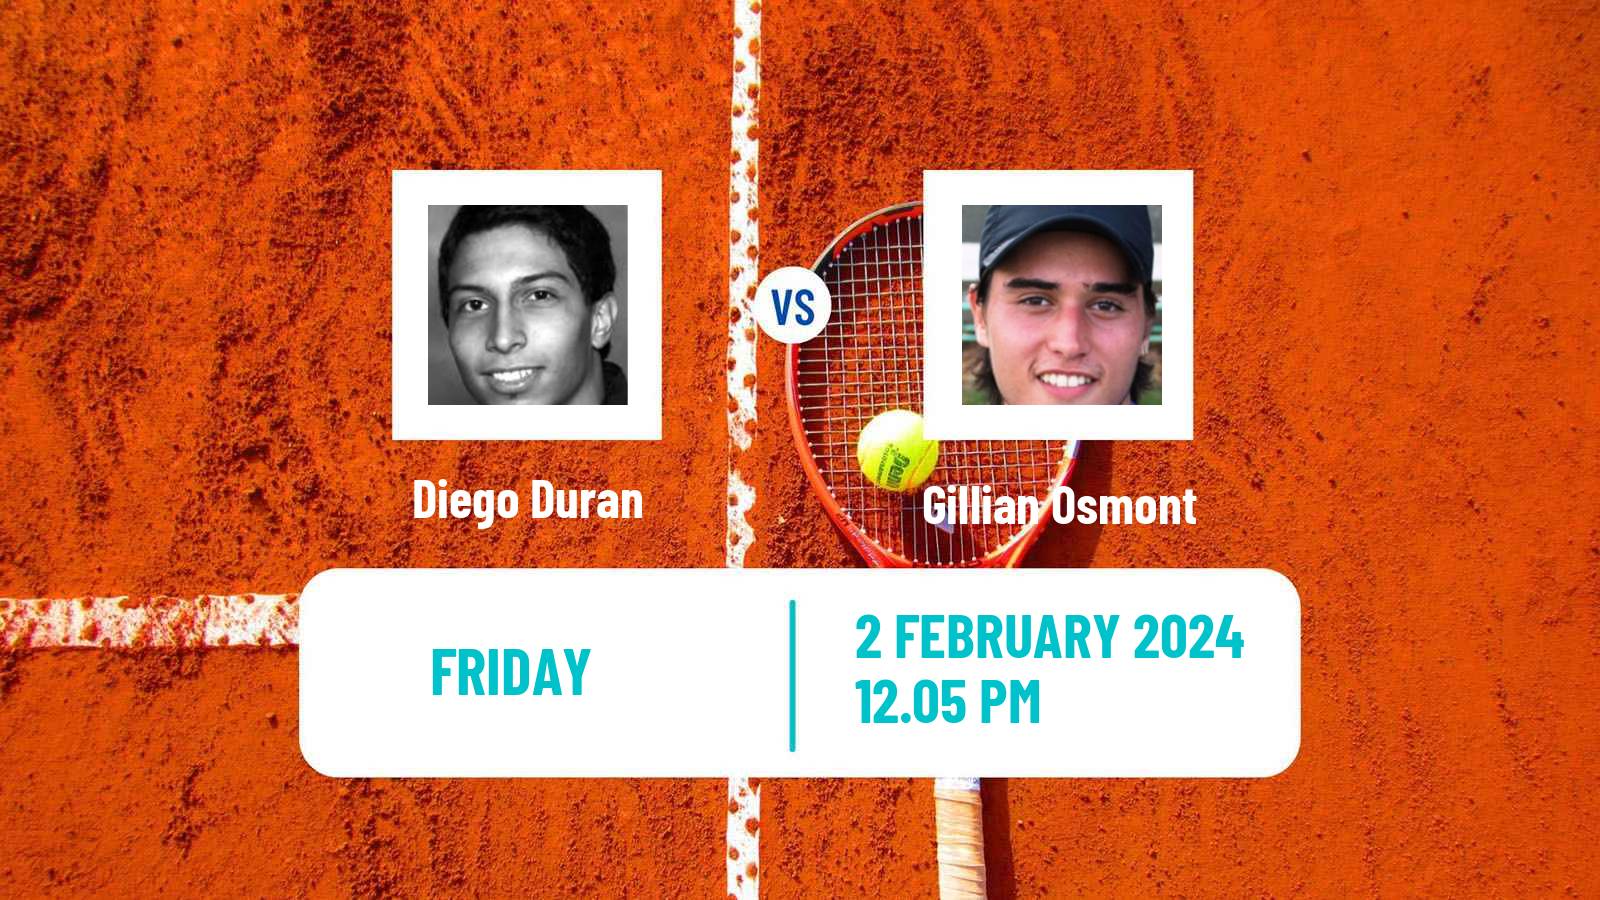 Tennis Davis Cup World Group II Diego Duran - Gillian Osmont